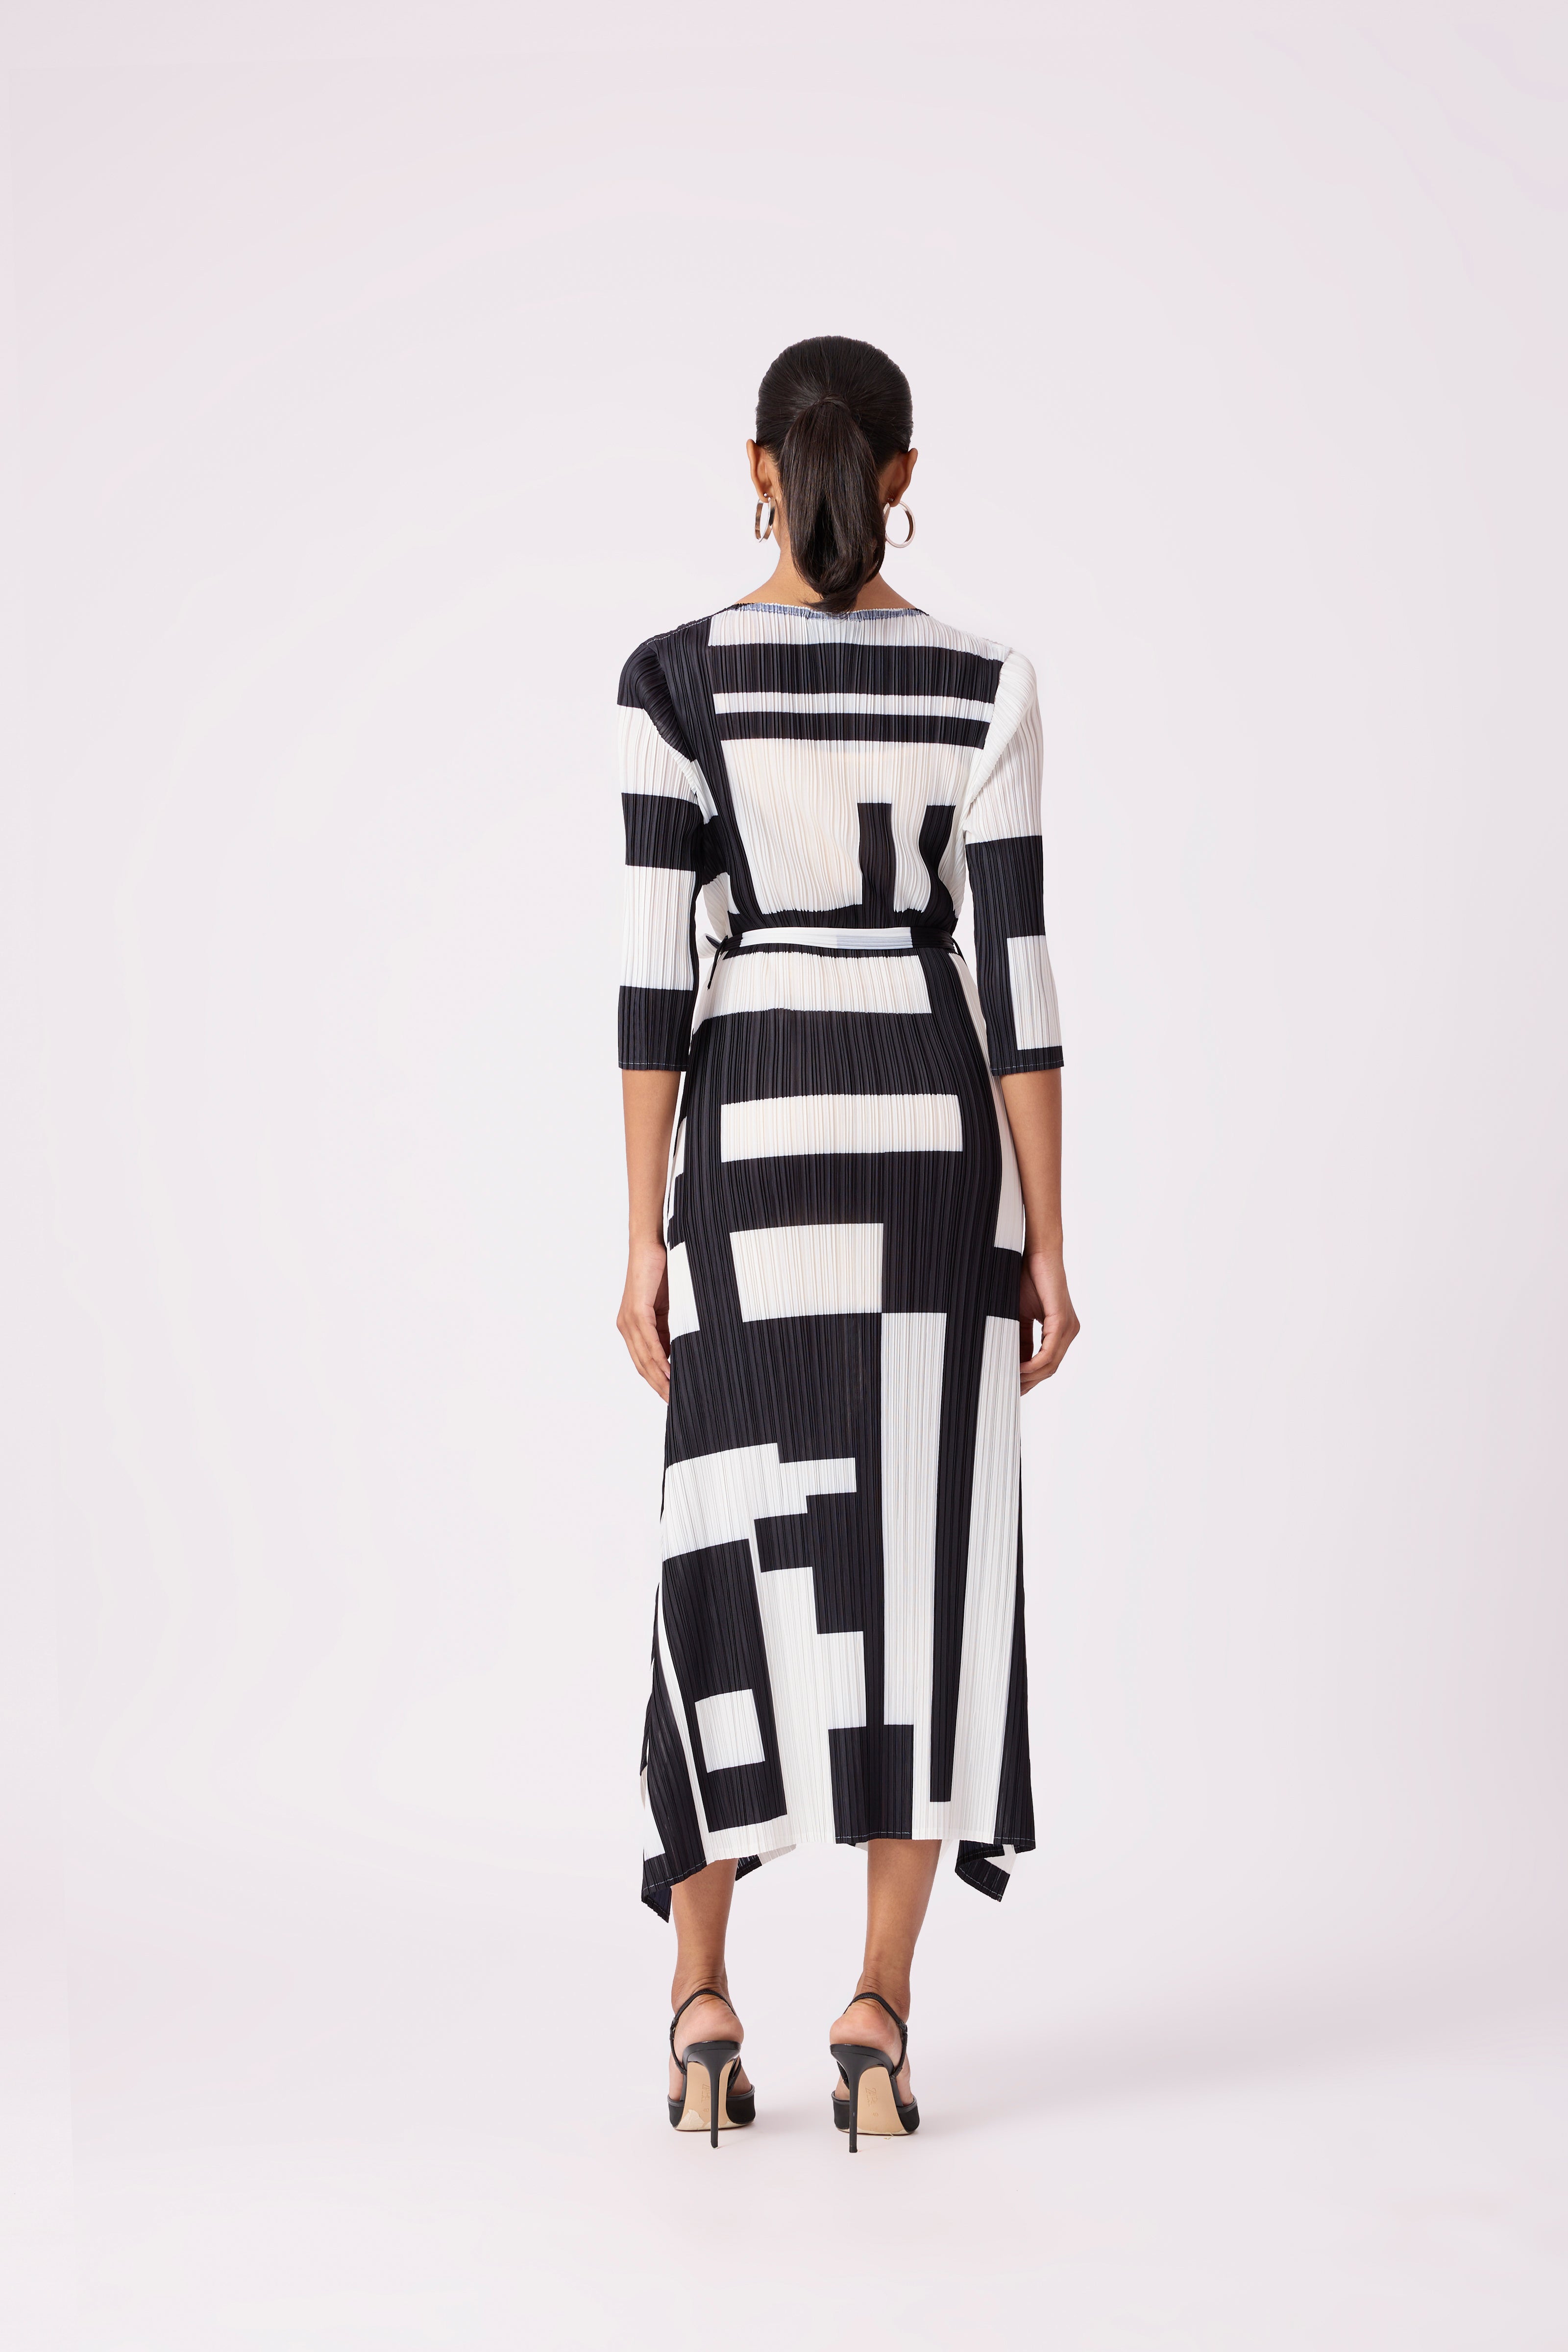 Trista Abstract Print Dress - Black White